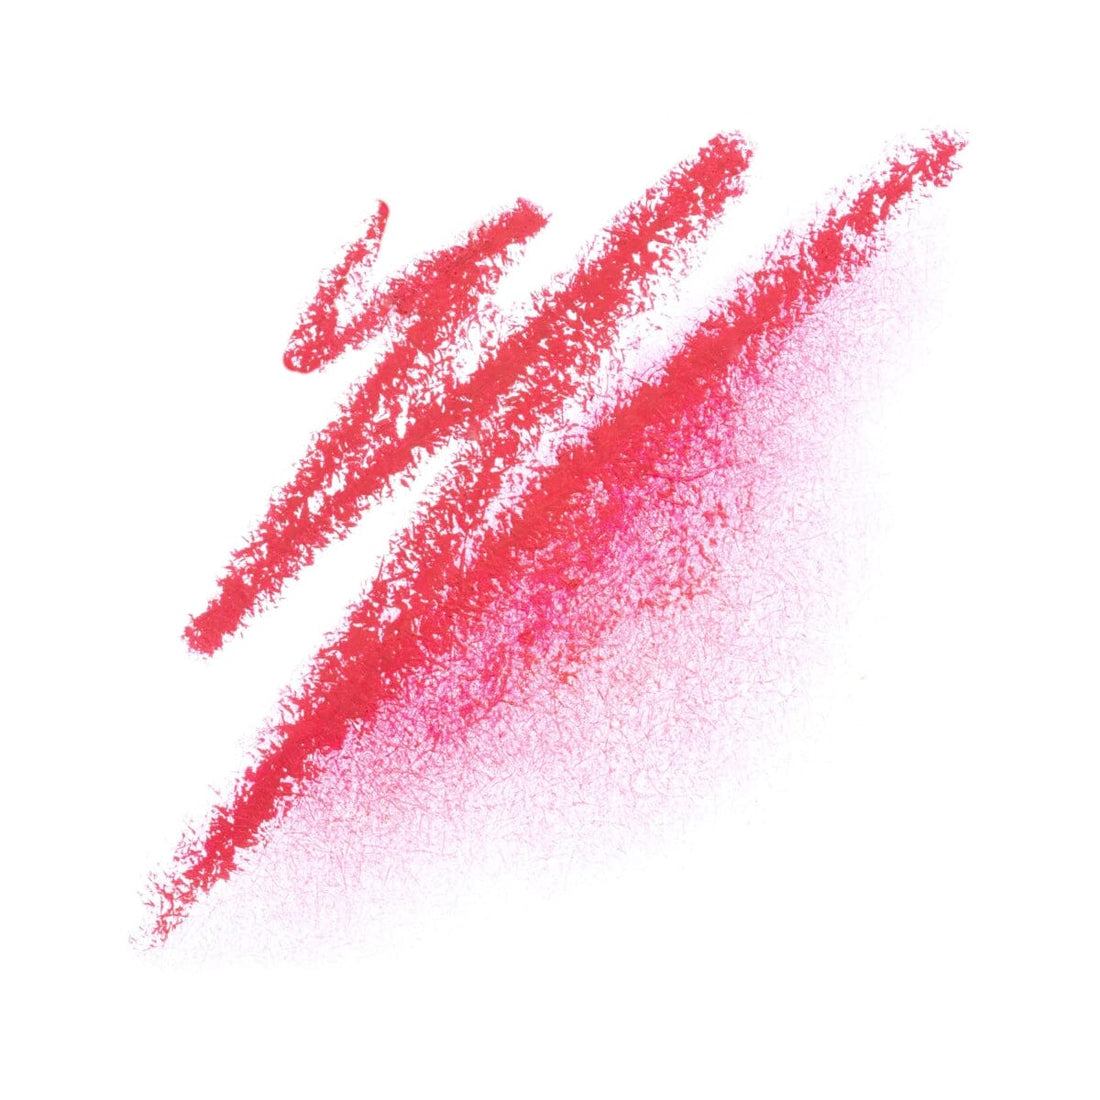 Make-up Designory Lip Pencil - Red - HairMNL